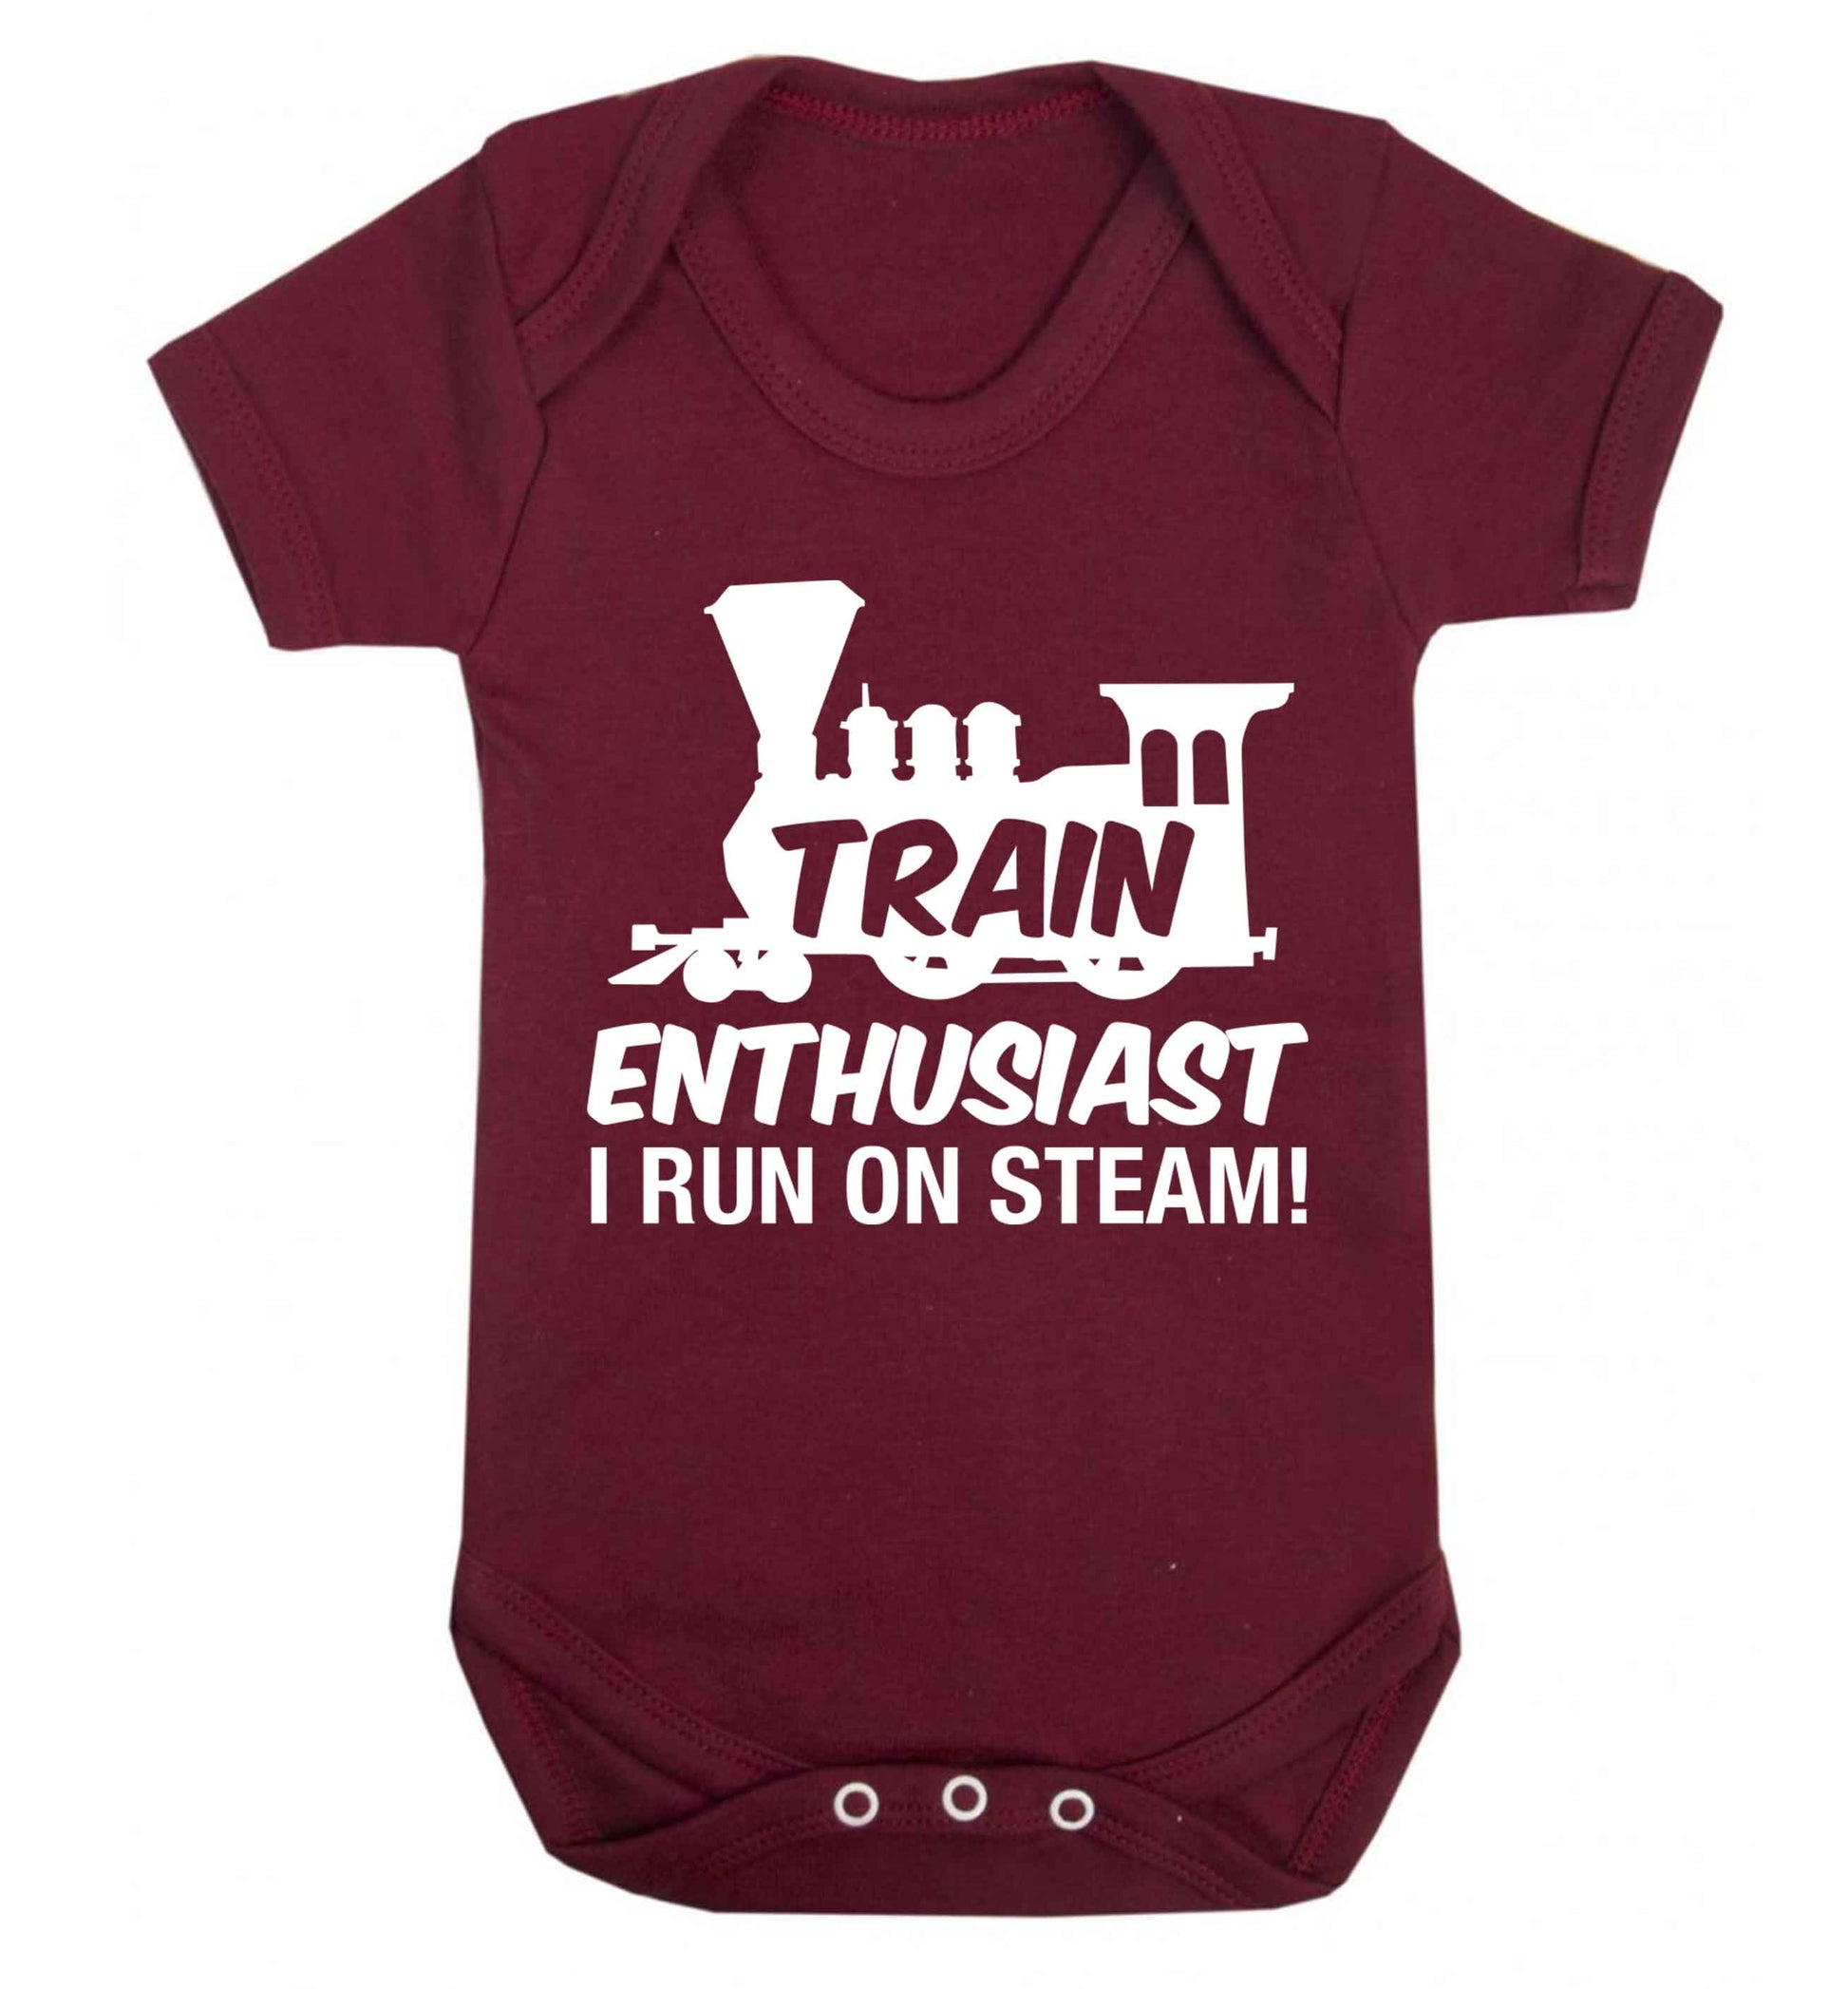 Train enthusiast I run on steam Baby Vest maroon 18-24 months